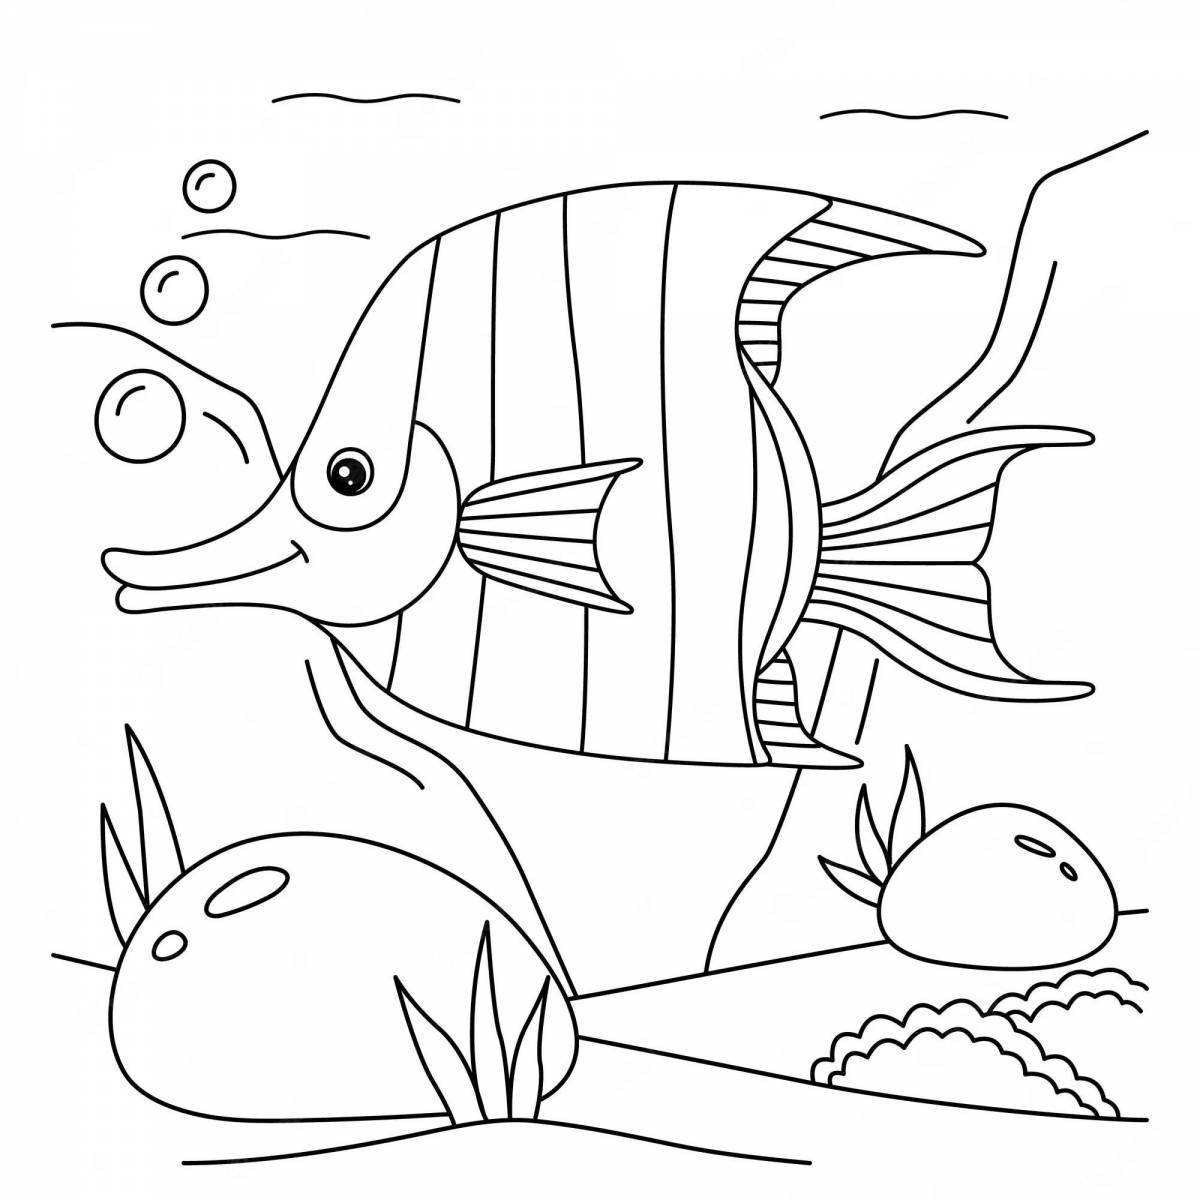 Magic aquarium fish coloring book for kids